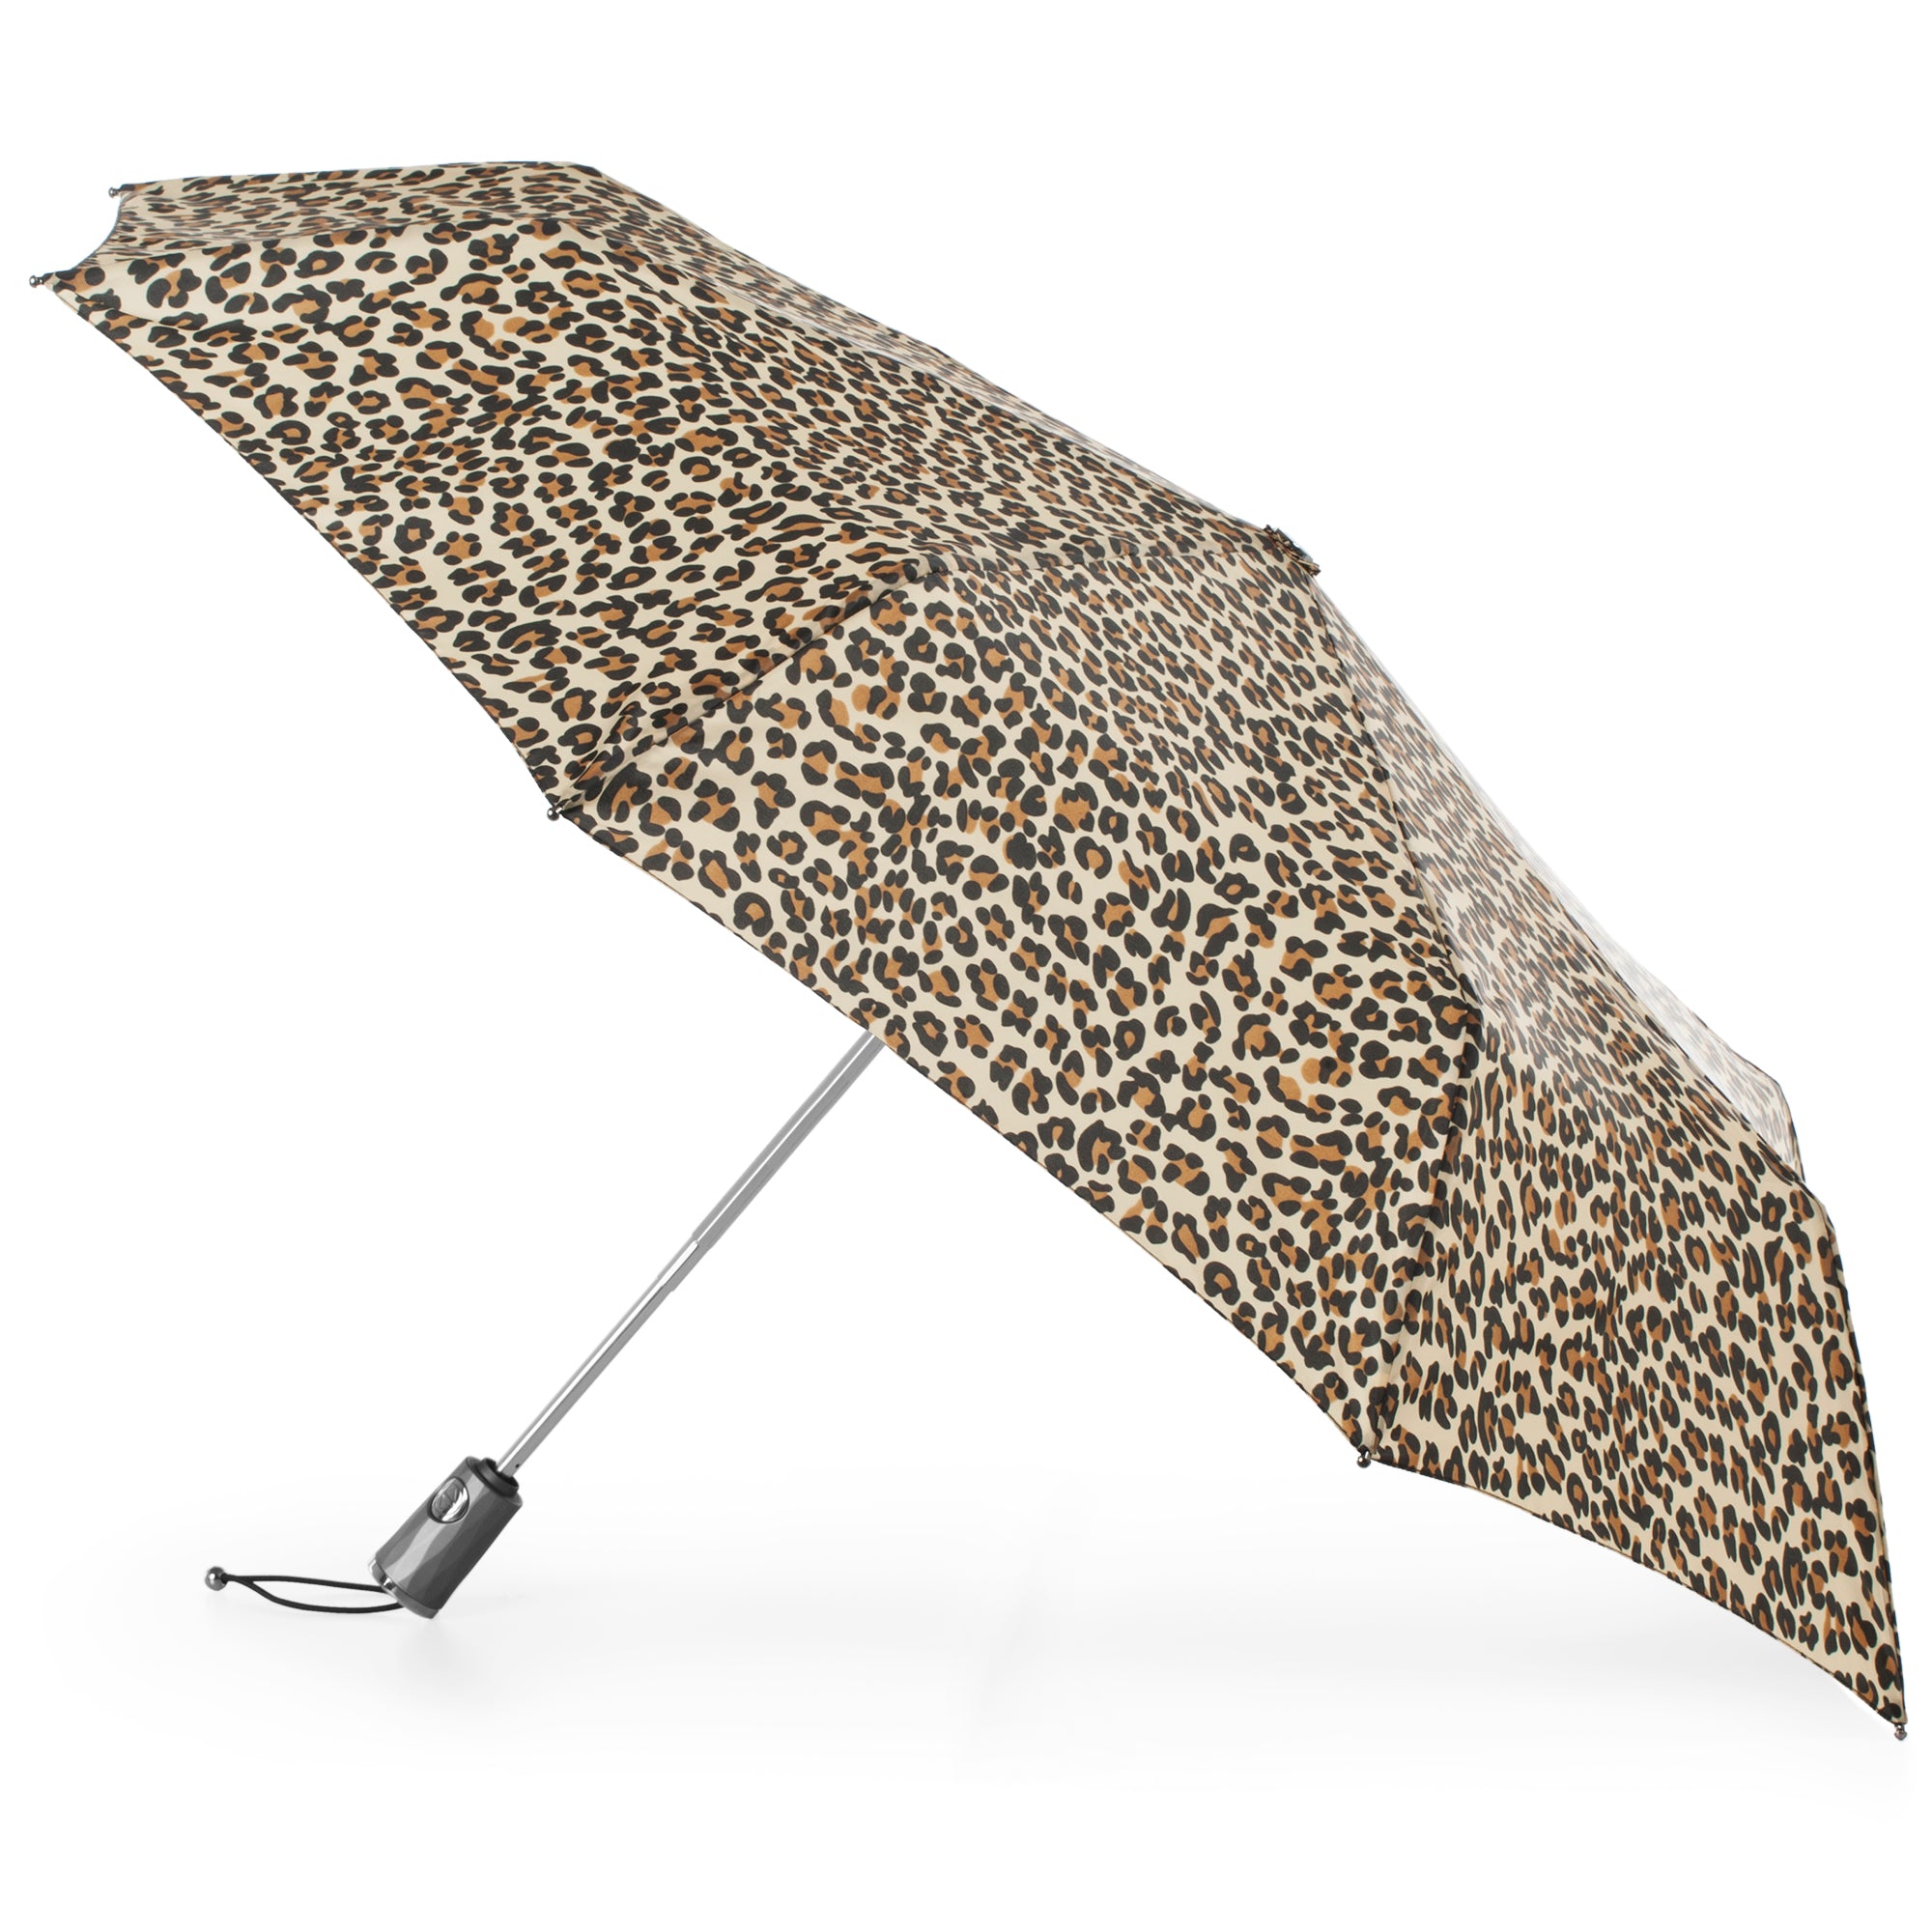 Large SunGuard® Folding Umbrella with Auto Open/Close Technology